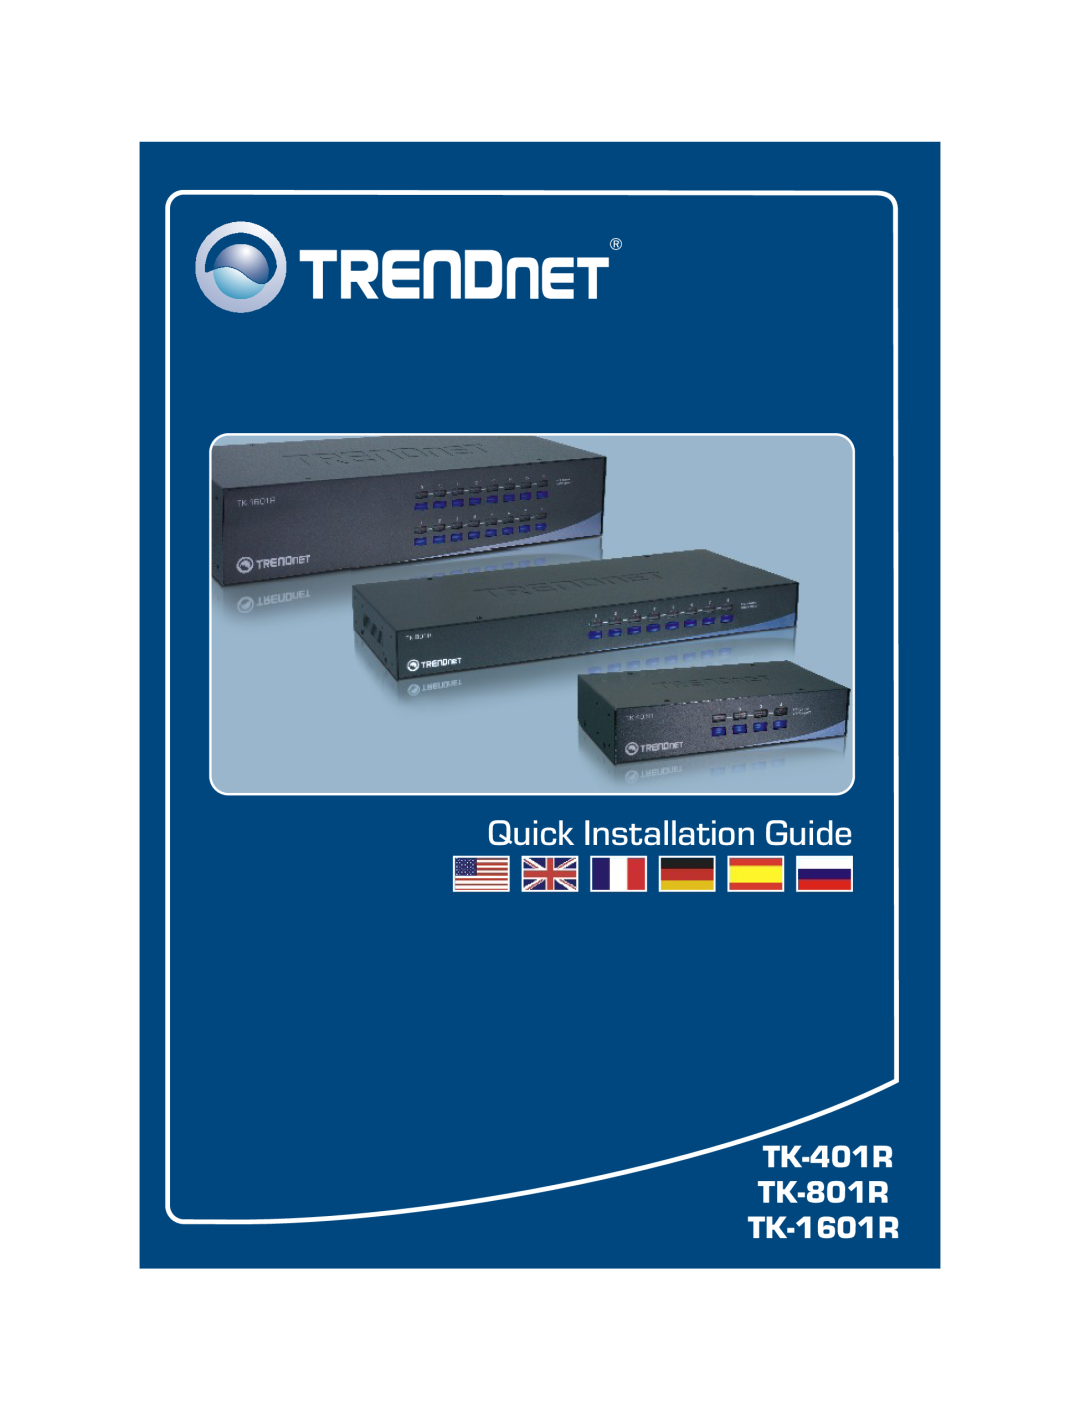 TRENDnet manual TK-401R TK-801R TK-1601R, Quick Installation Guide 